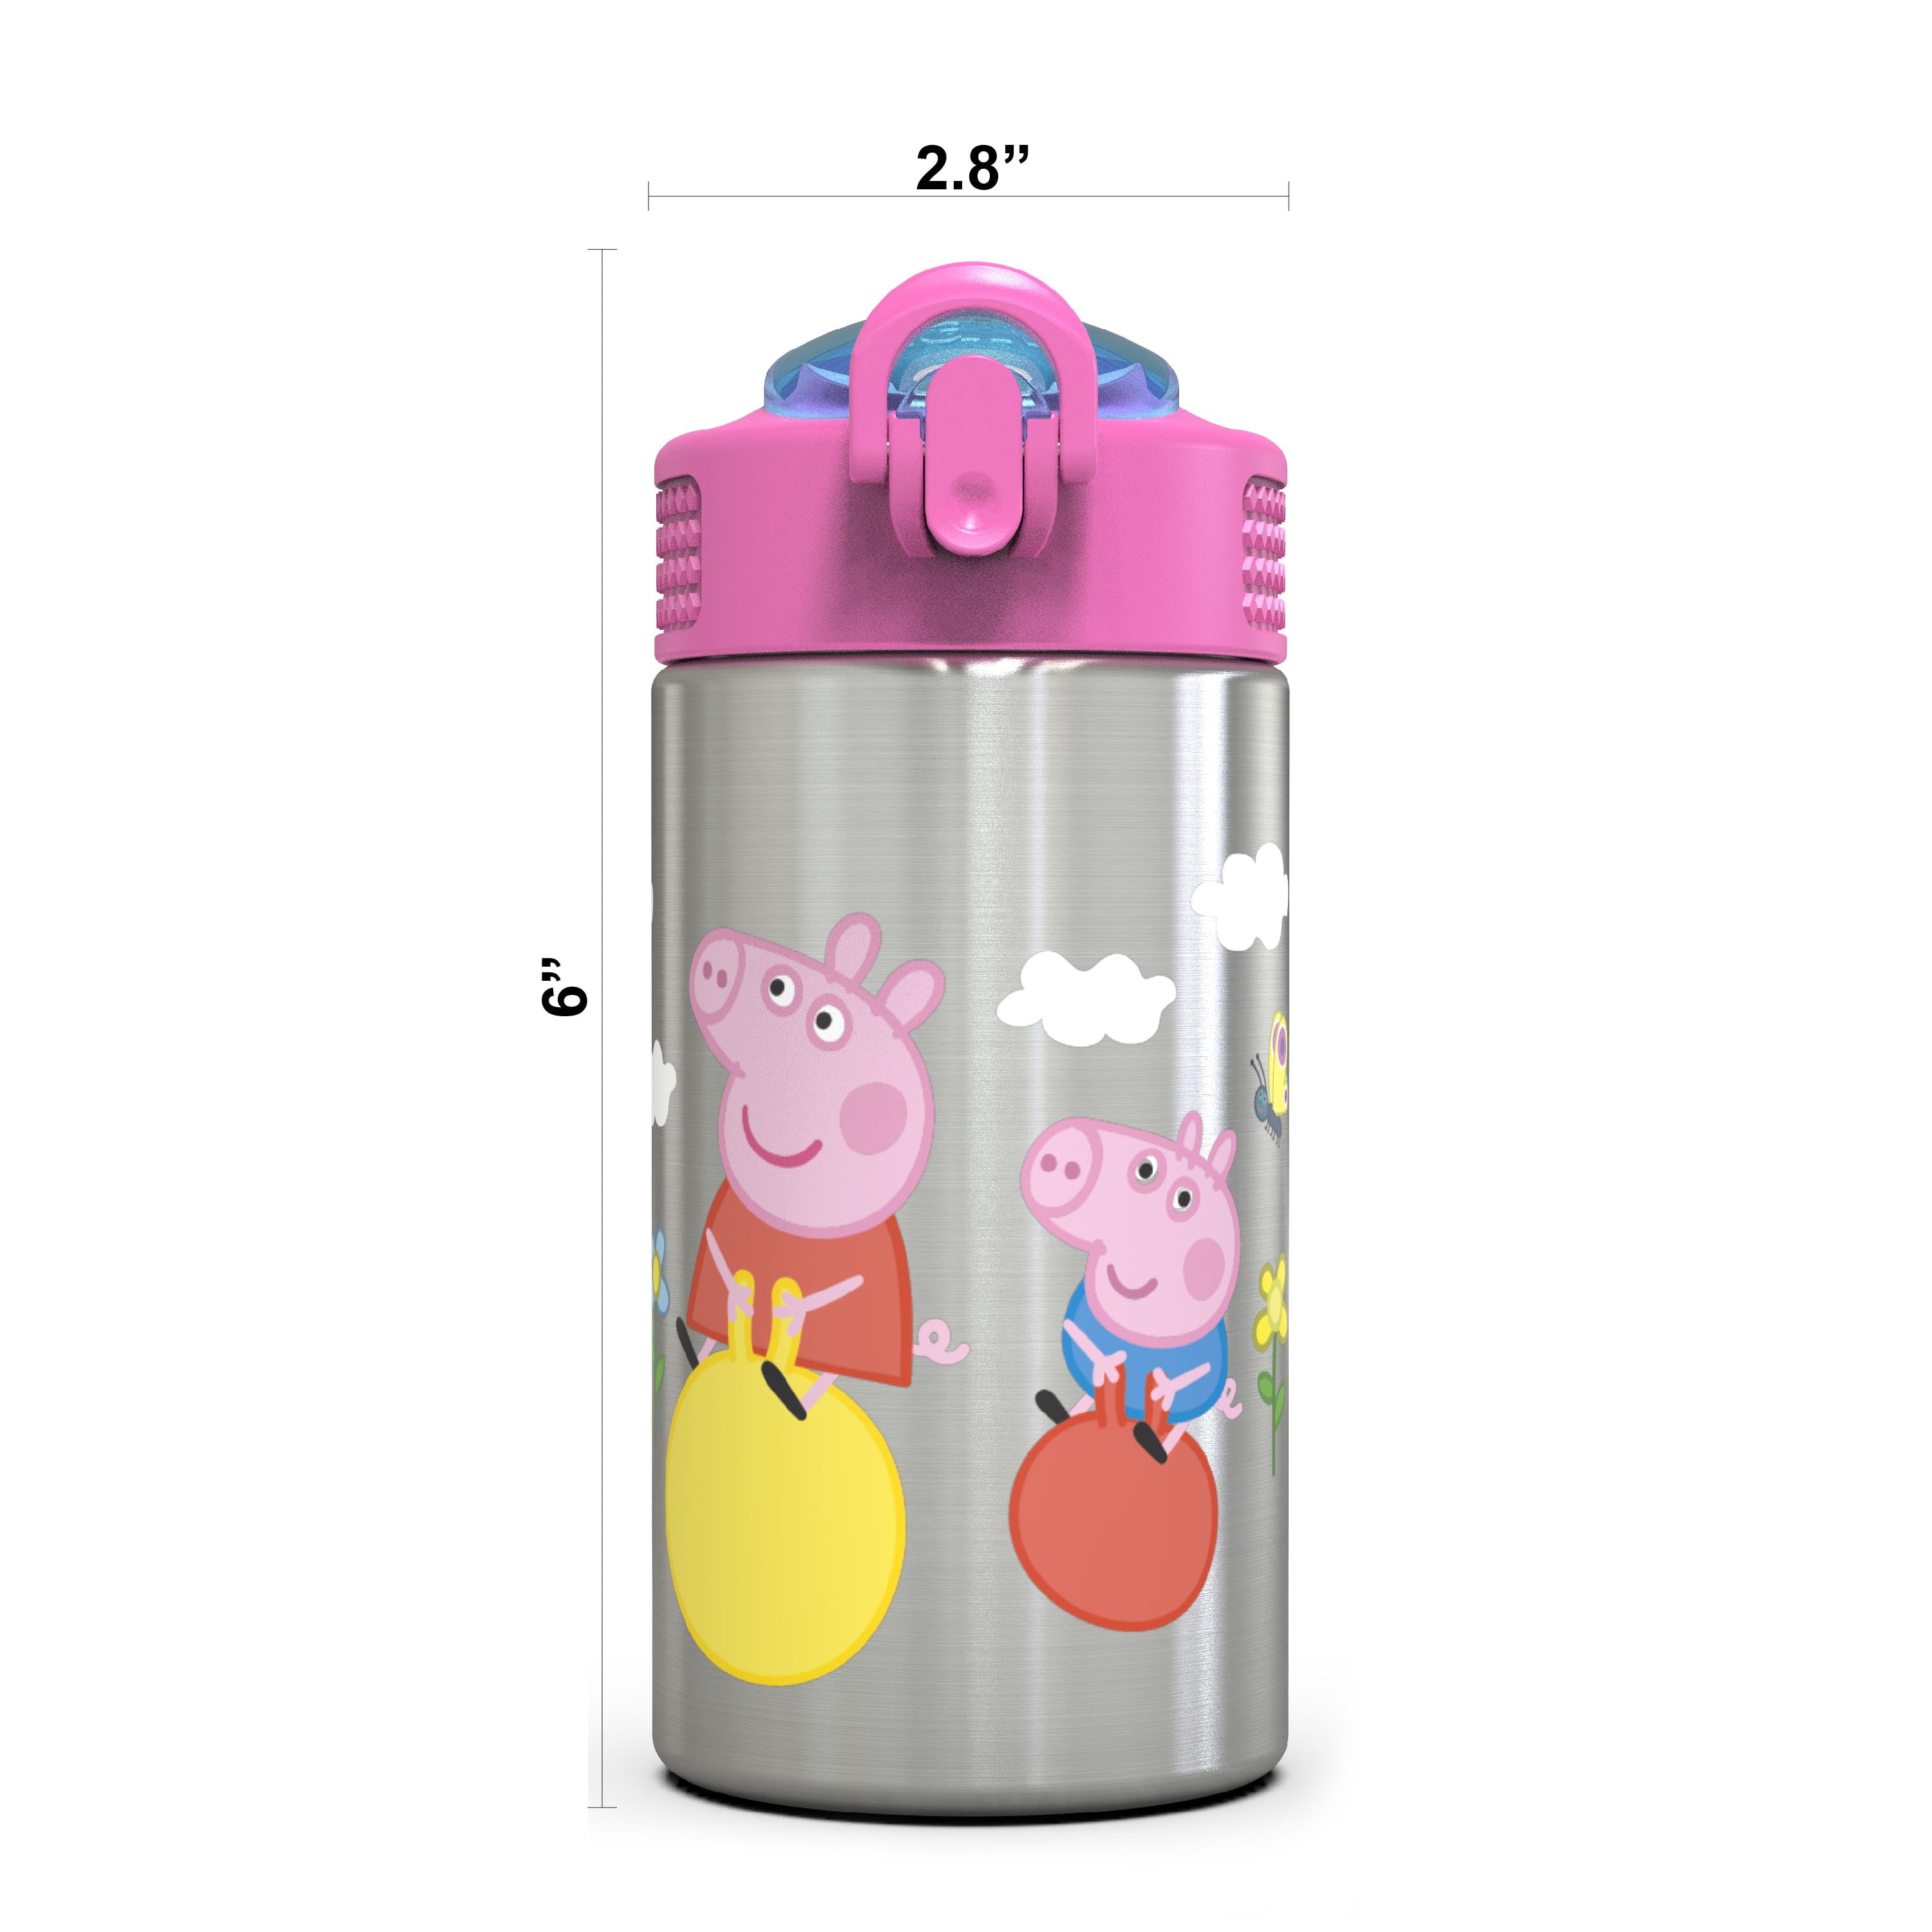 Koziol Oase Organic Water Bottle 425ml – Peppa Pig Sand